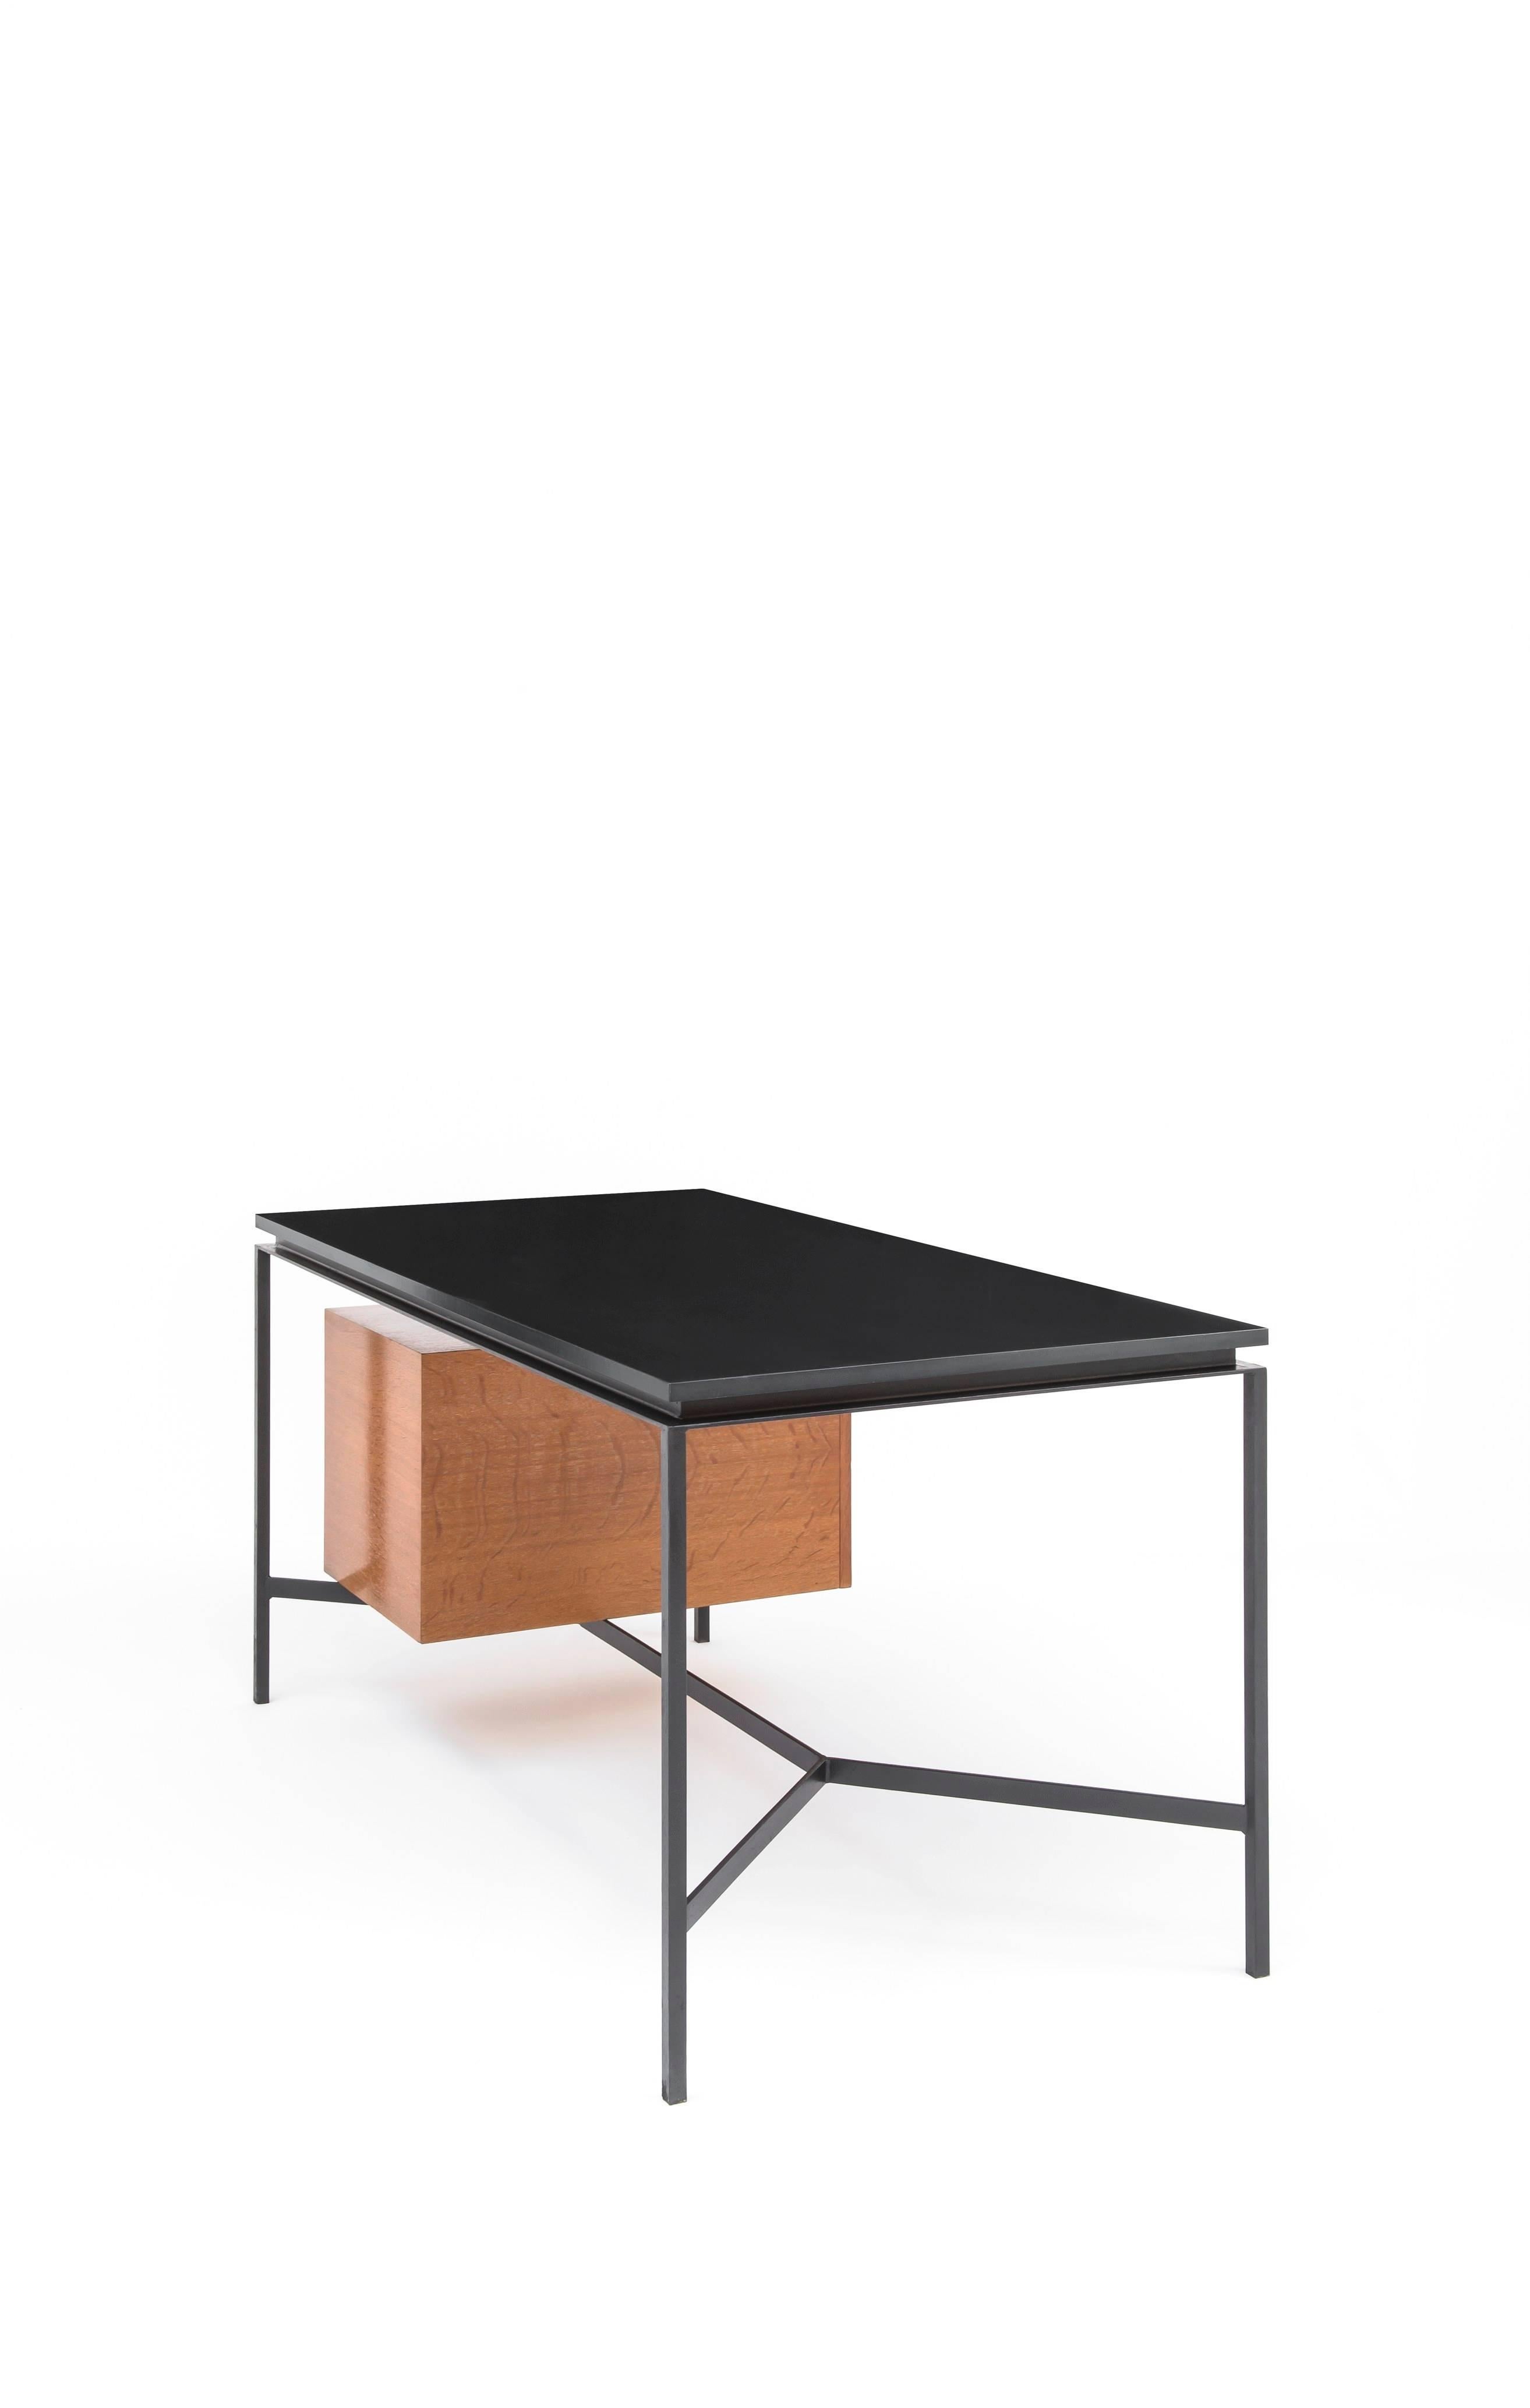 Desk CM172 by Pierre Paulin (1927-2009).
Thonet edition, 1958.